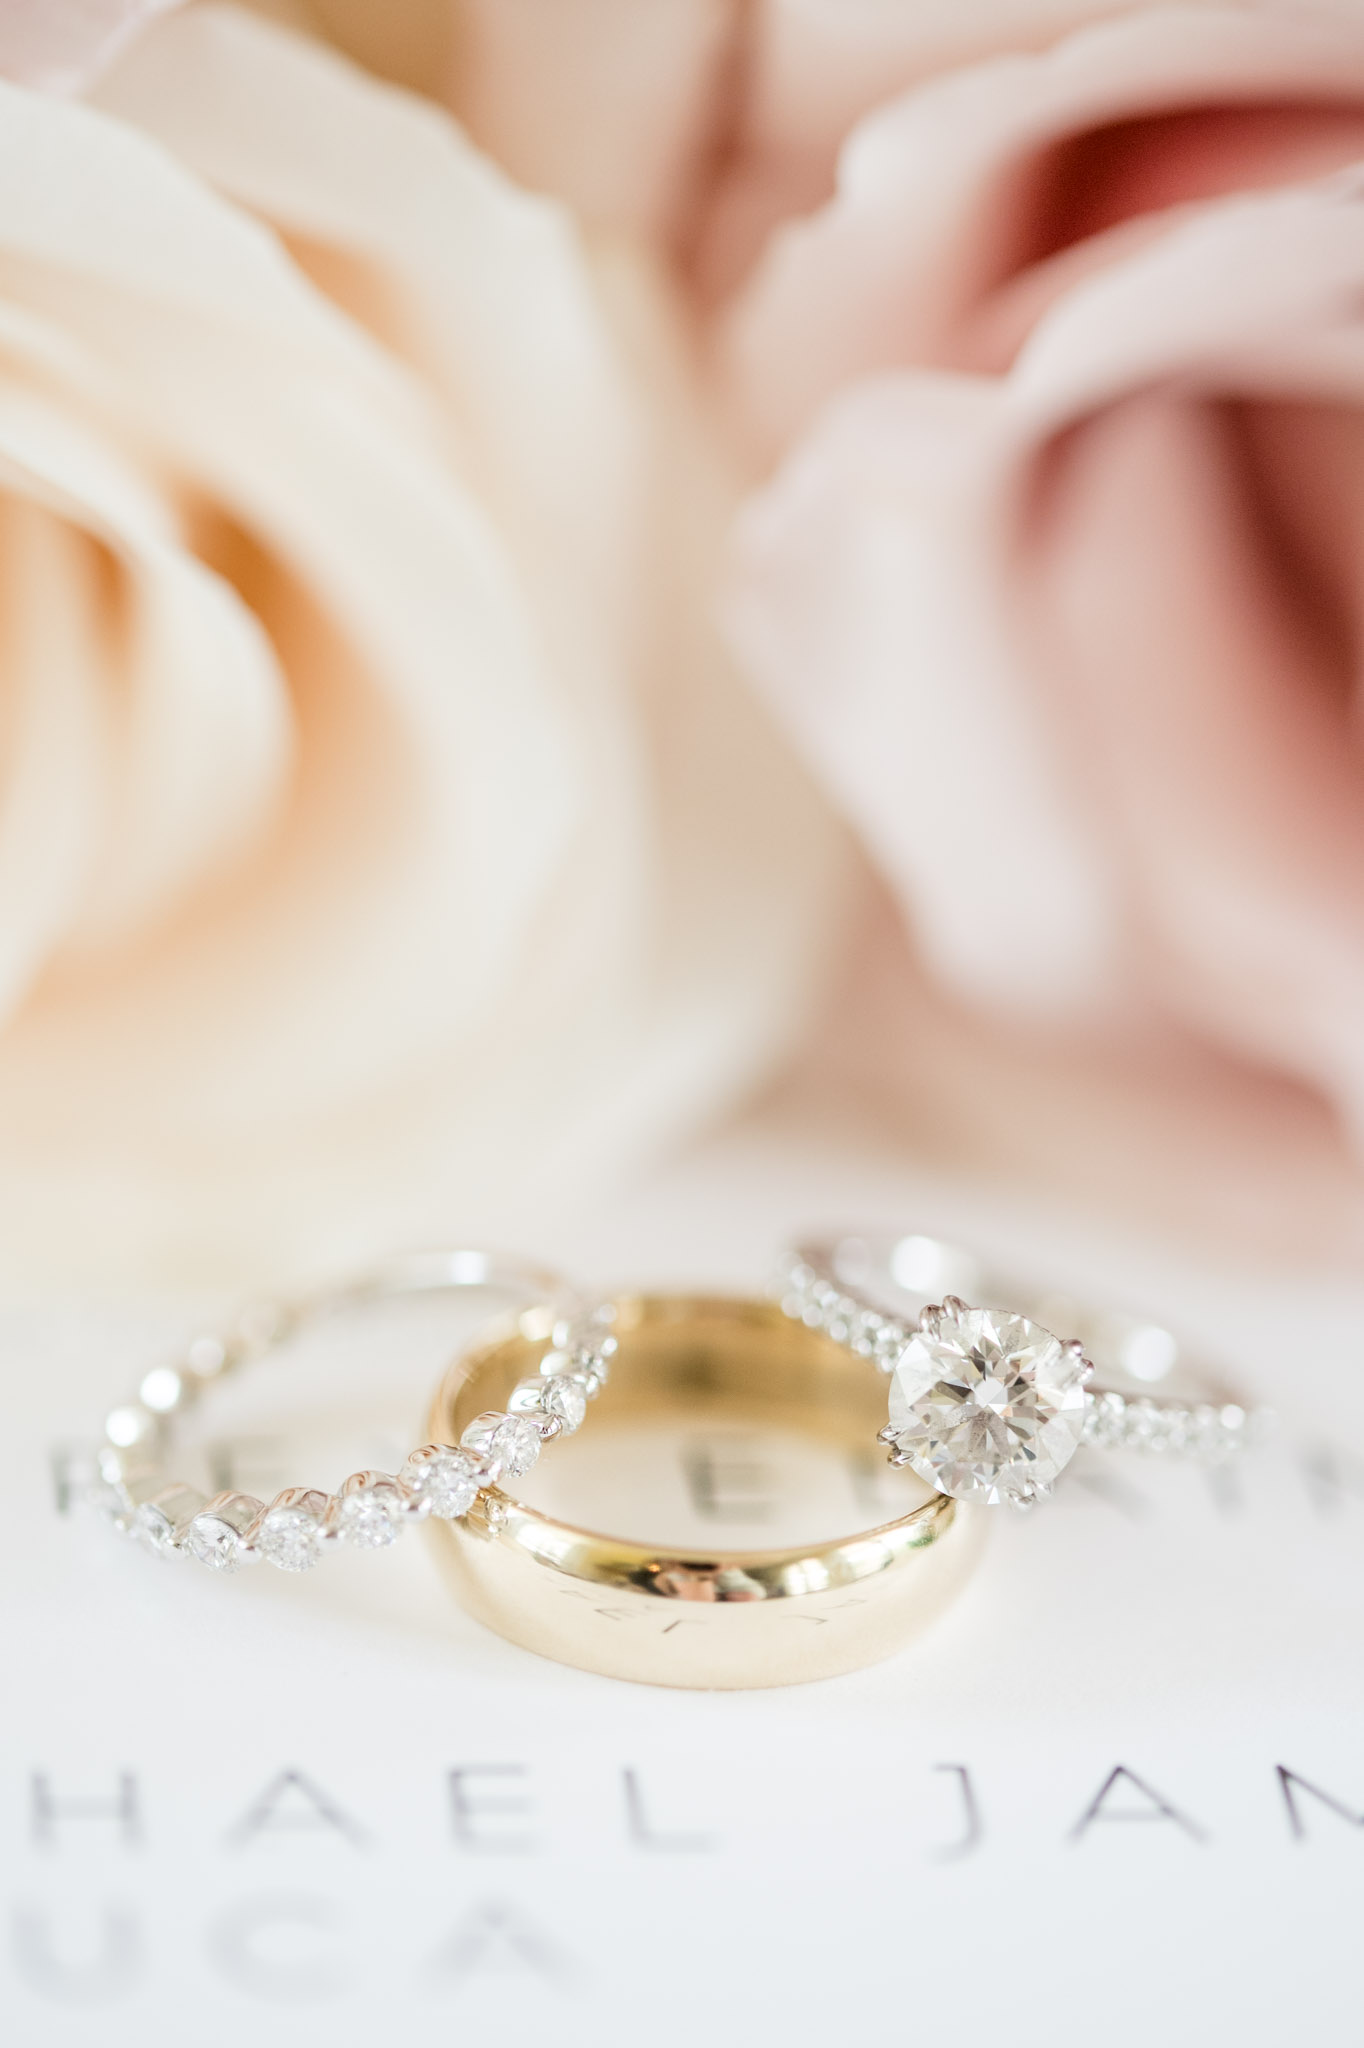 Wedding rings sit on wedding invitations.